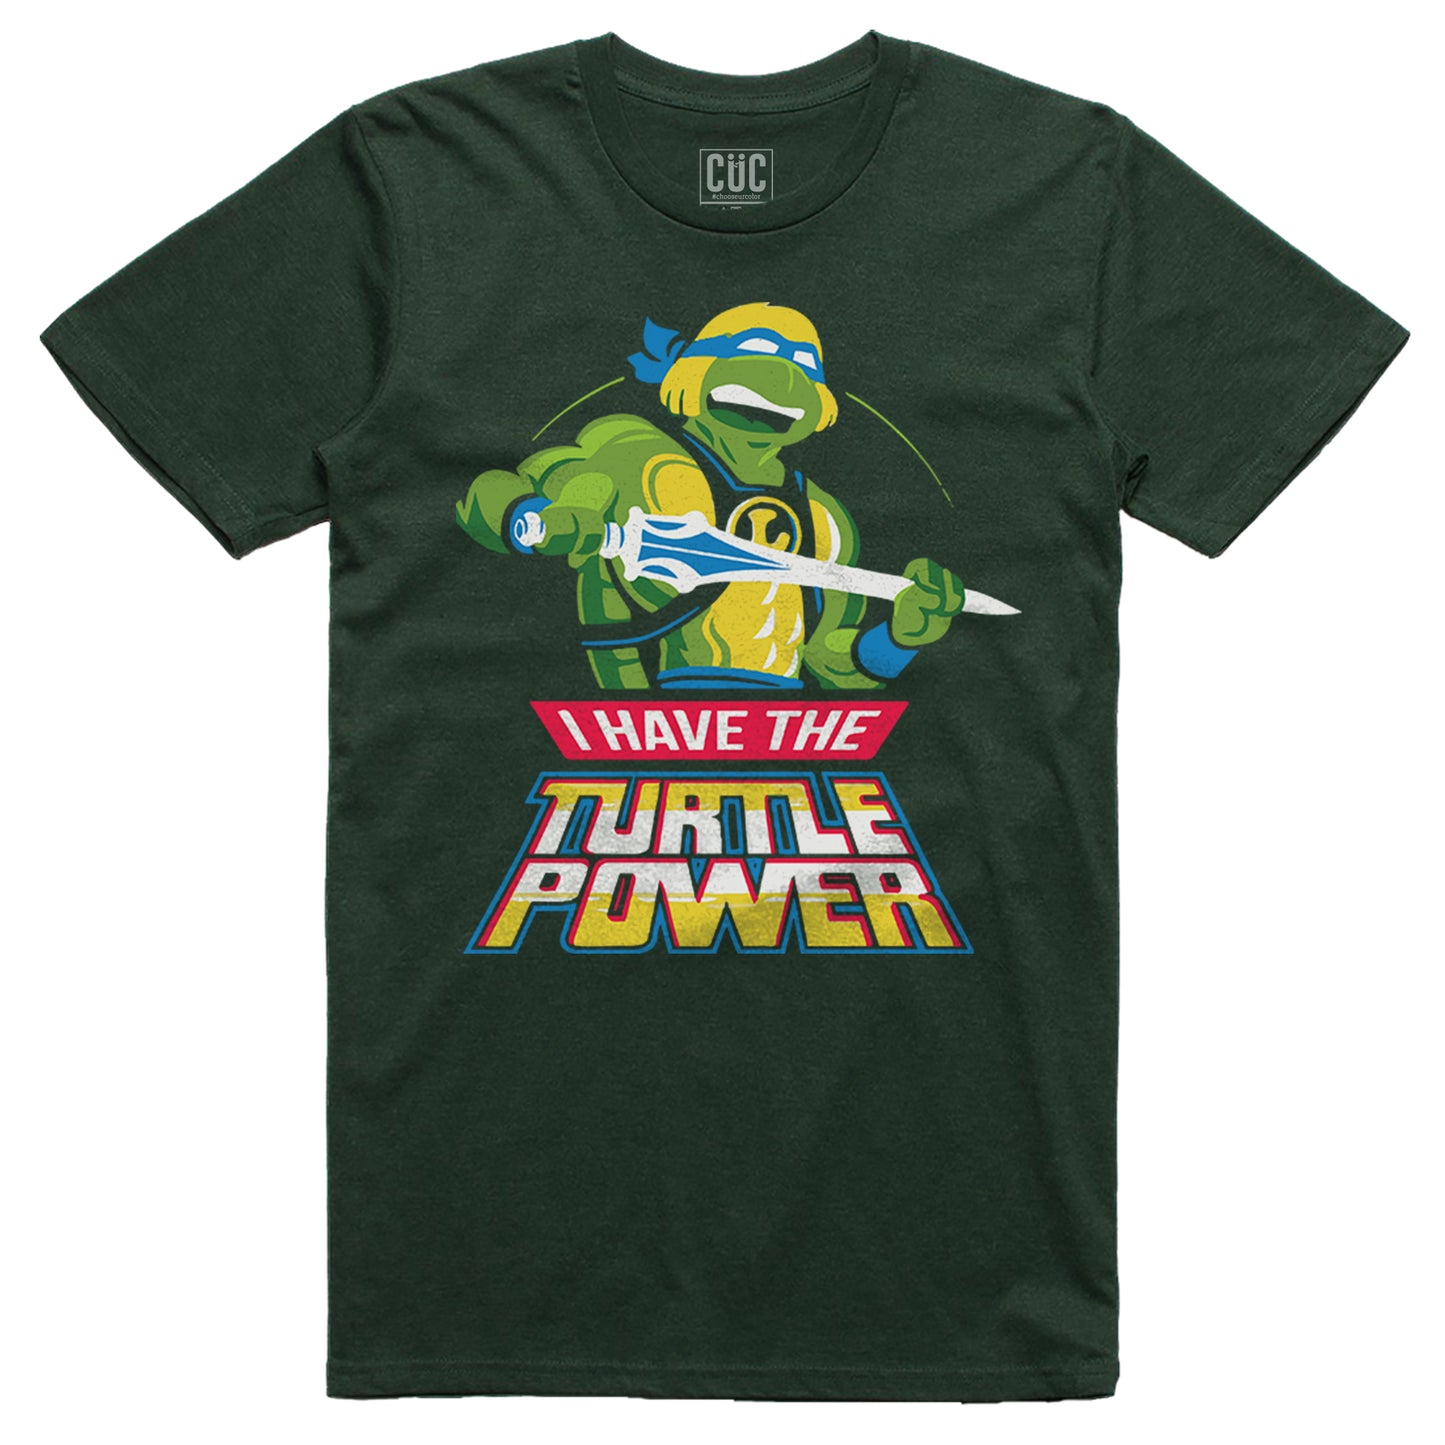 T-Shirt Turtle Power - Leonardo like He-Man - Cartoon #chooseurcolor - CUC chooseurcolor